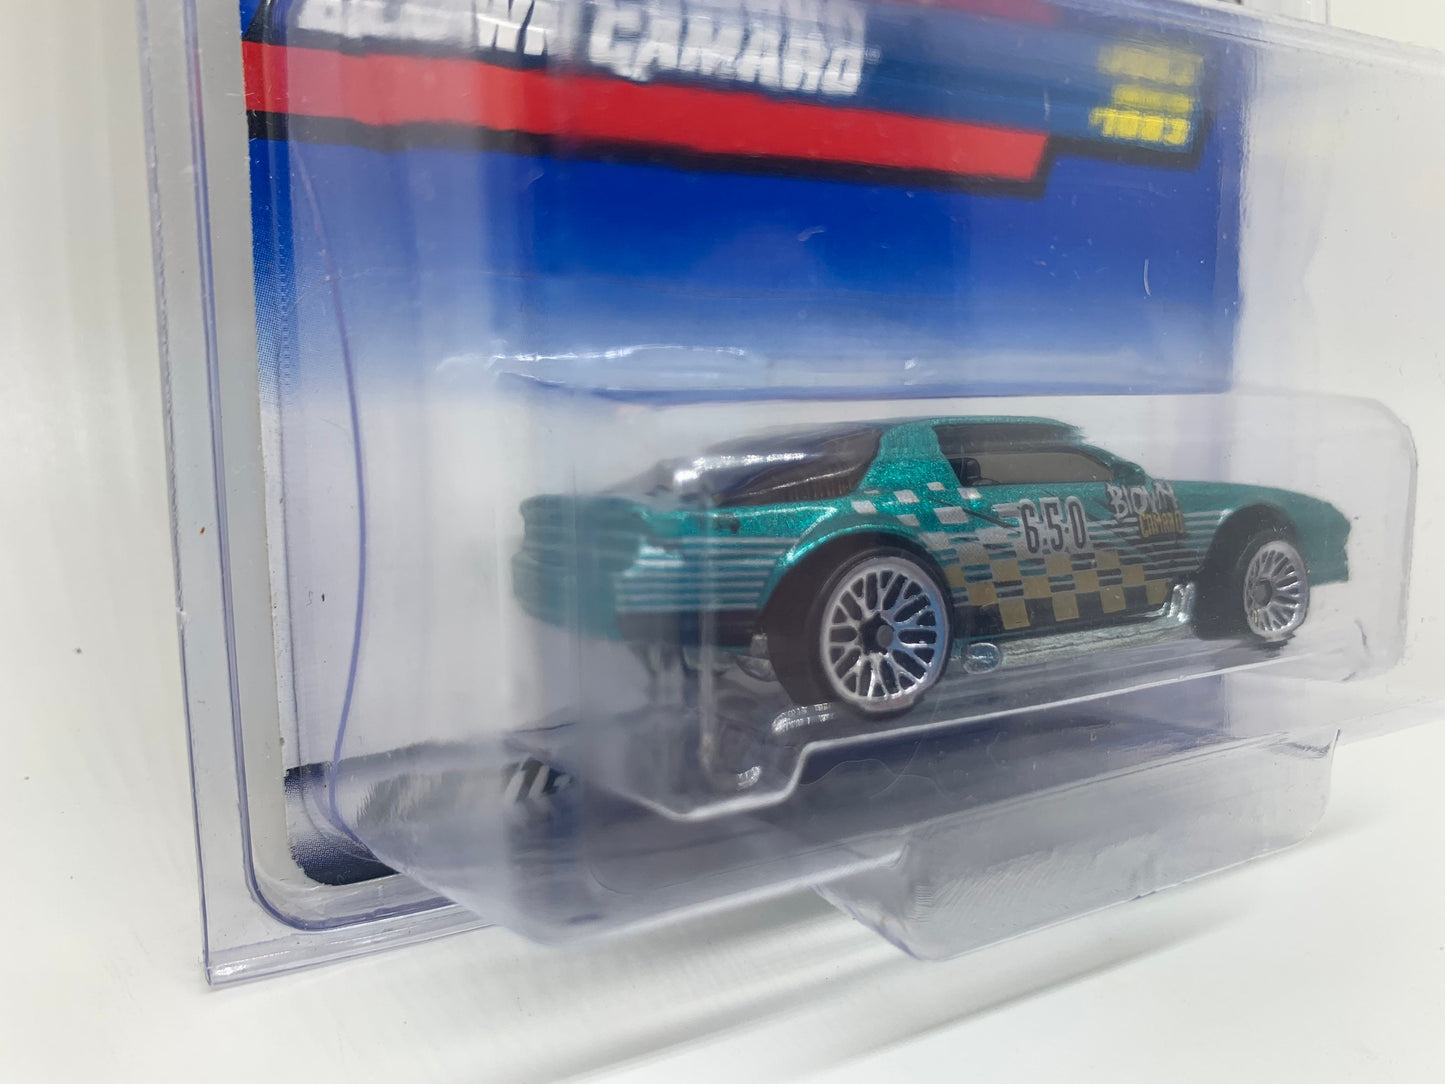 Hot Wheels Blown Camaro Metallic Aqua Mainline Collector #1083 Miniature Collectable Model Toy Car Perfect Birthday Gift